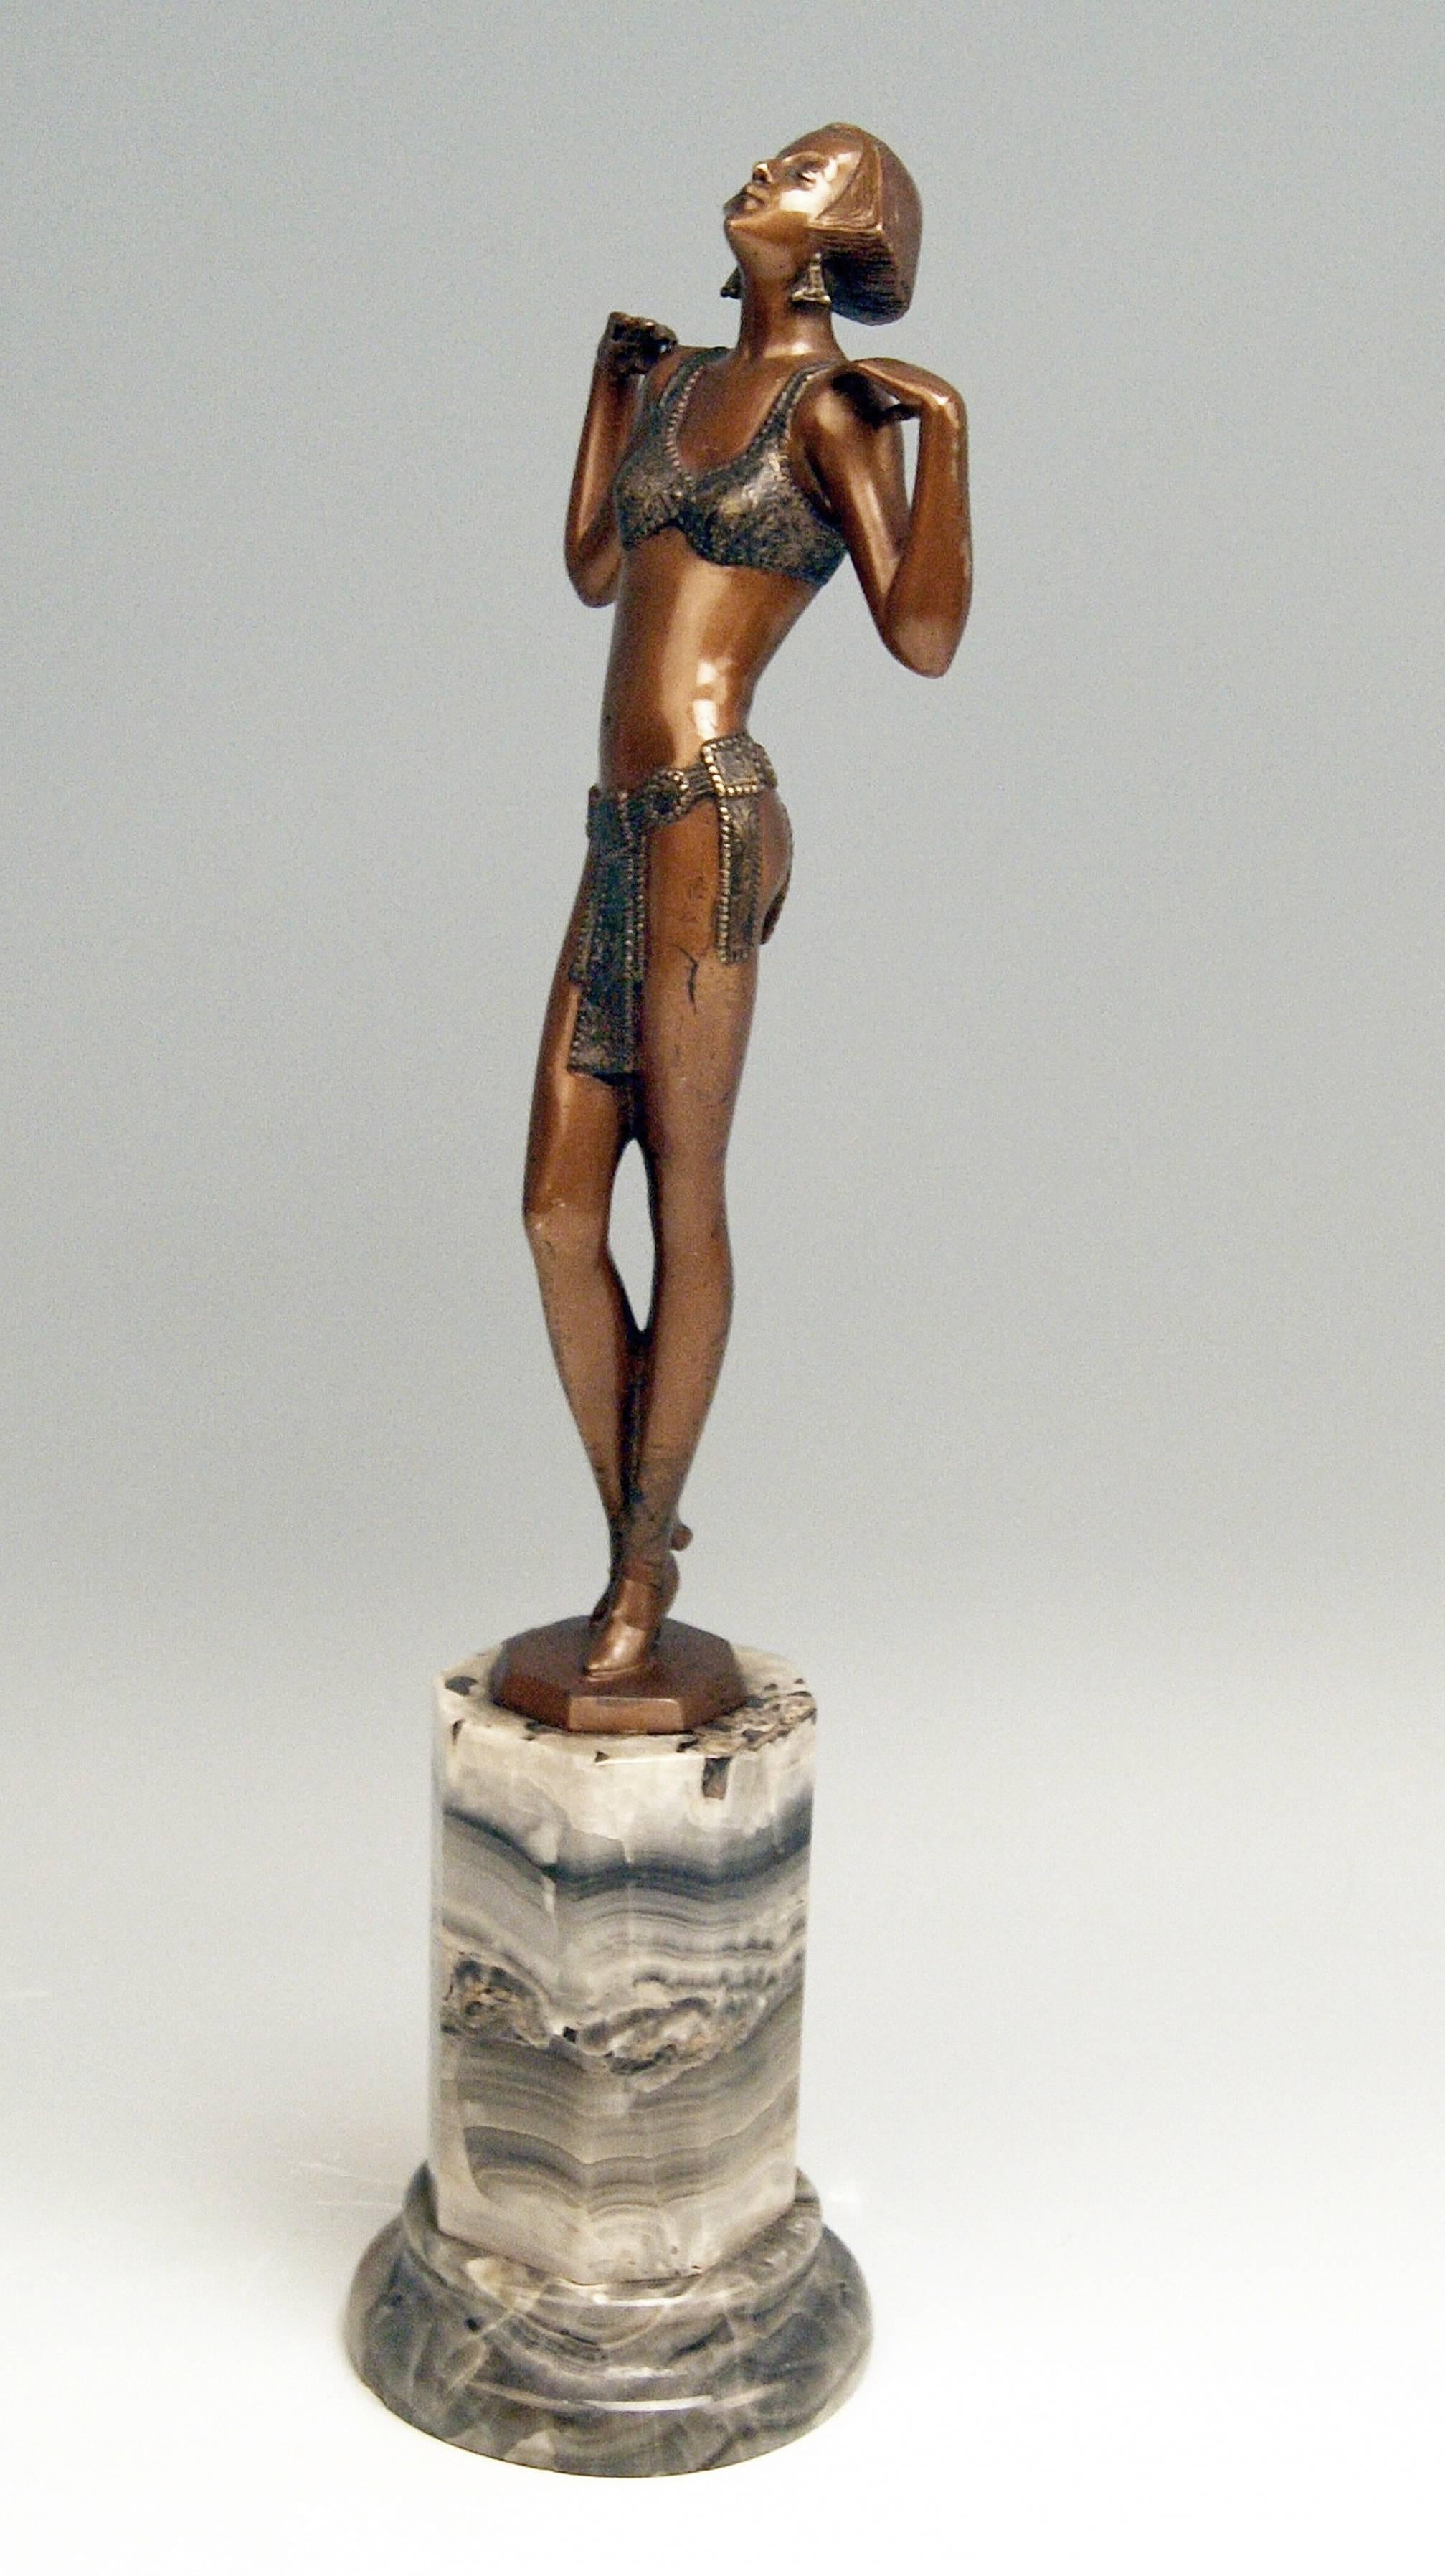 Austrian Vienna Bronze Art Deco Nude Maria Jeritza The Egyptian Helen by Lorenzl 1928